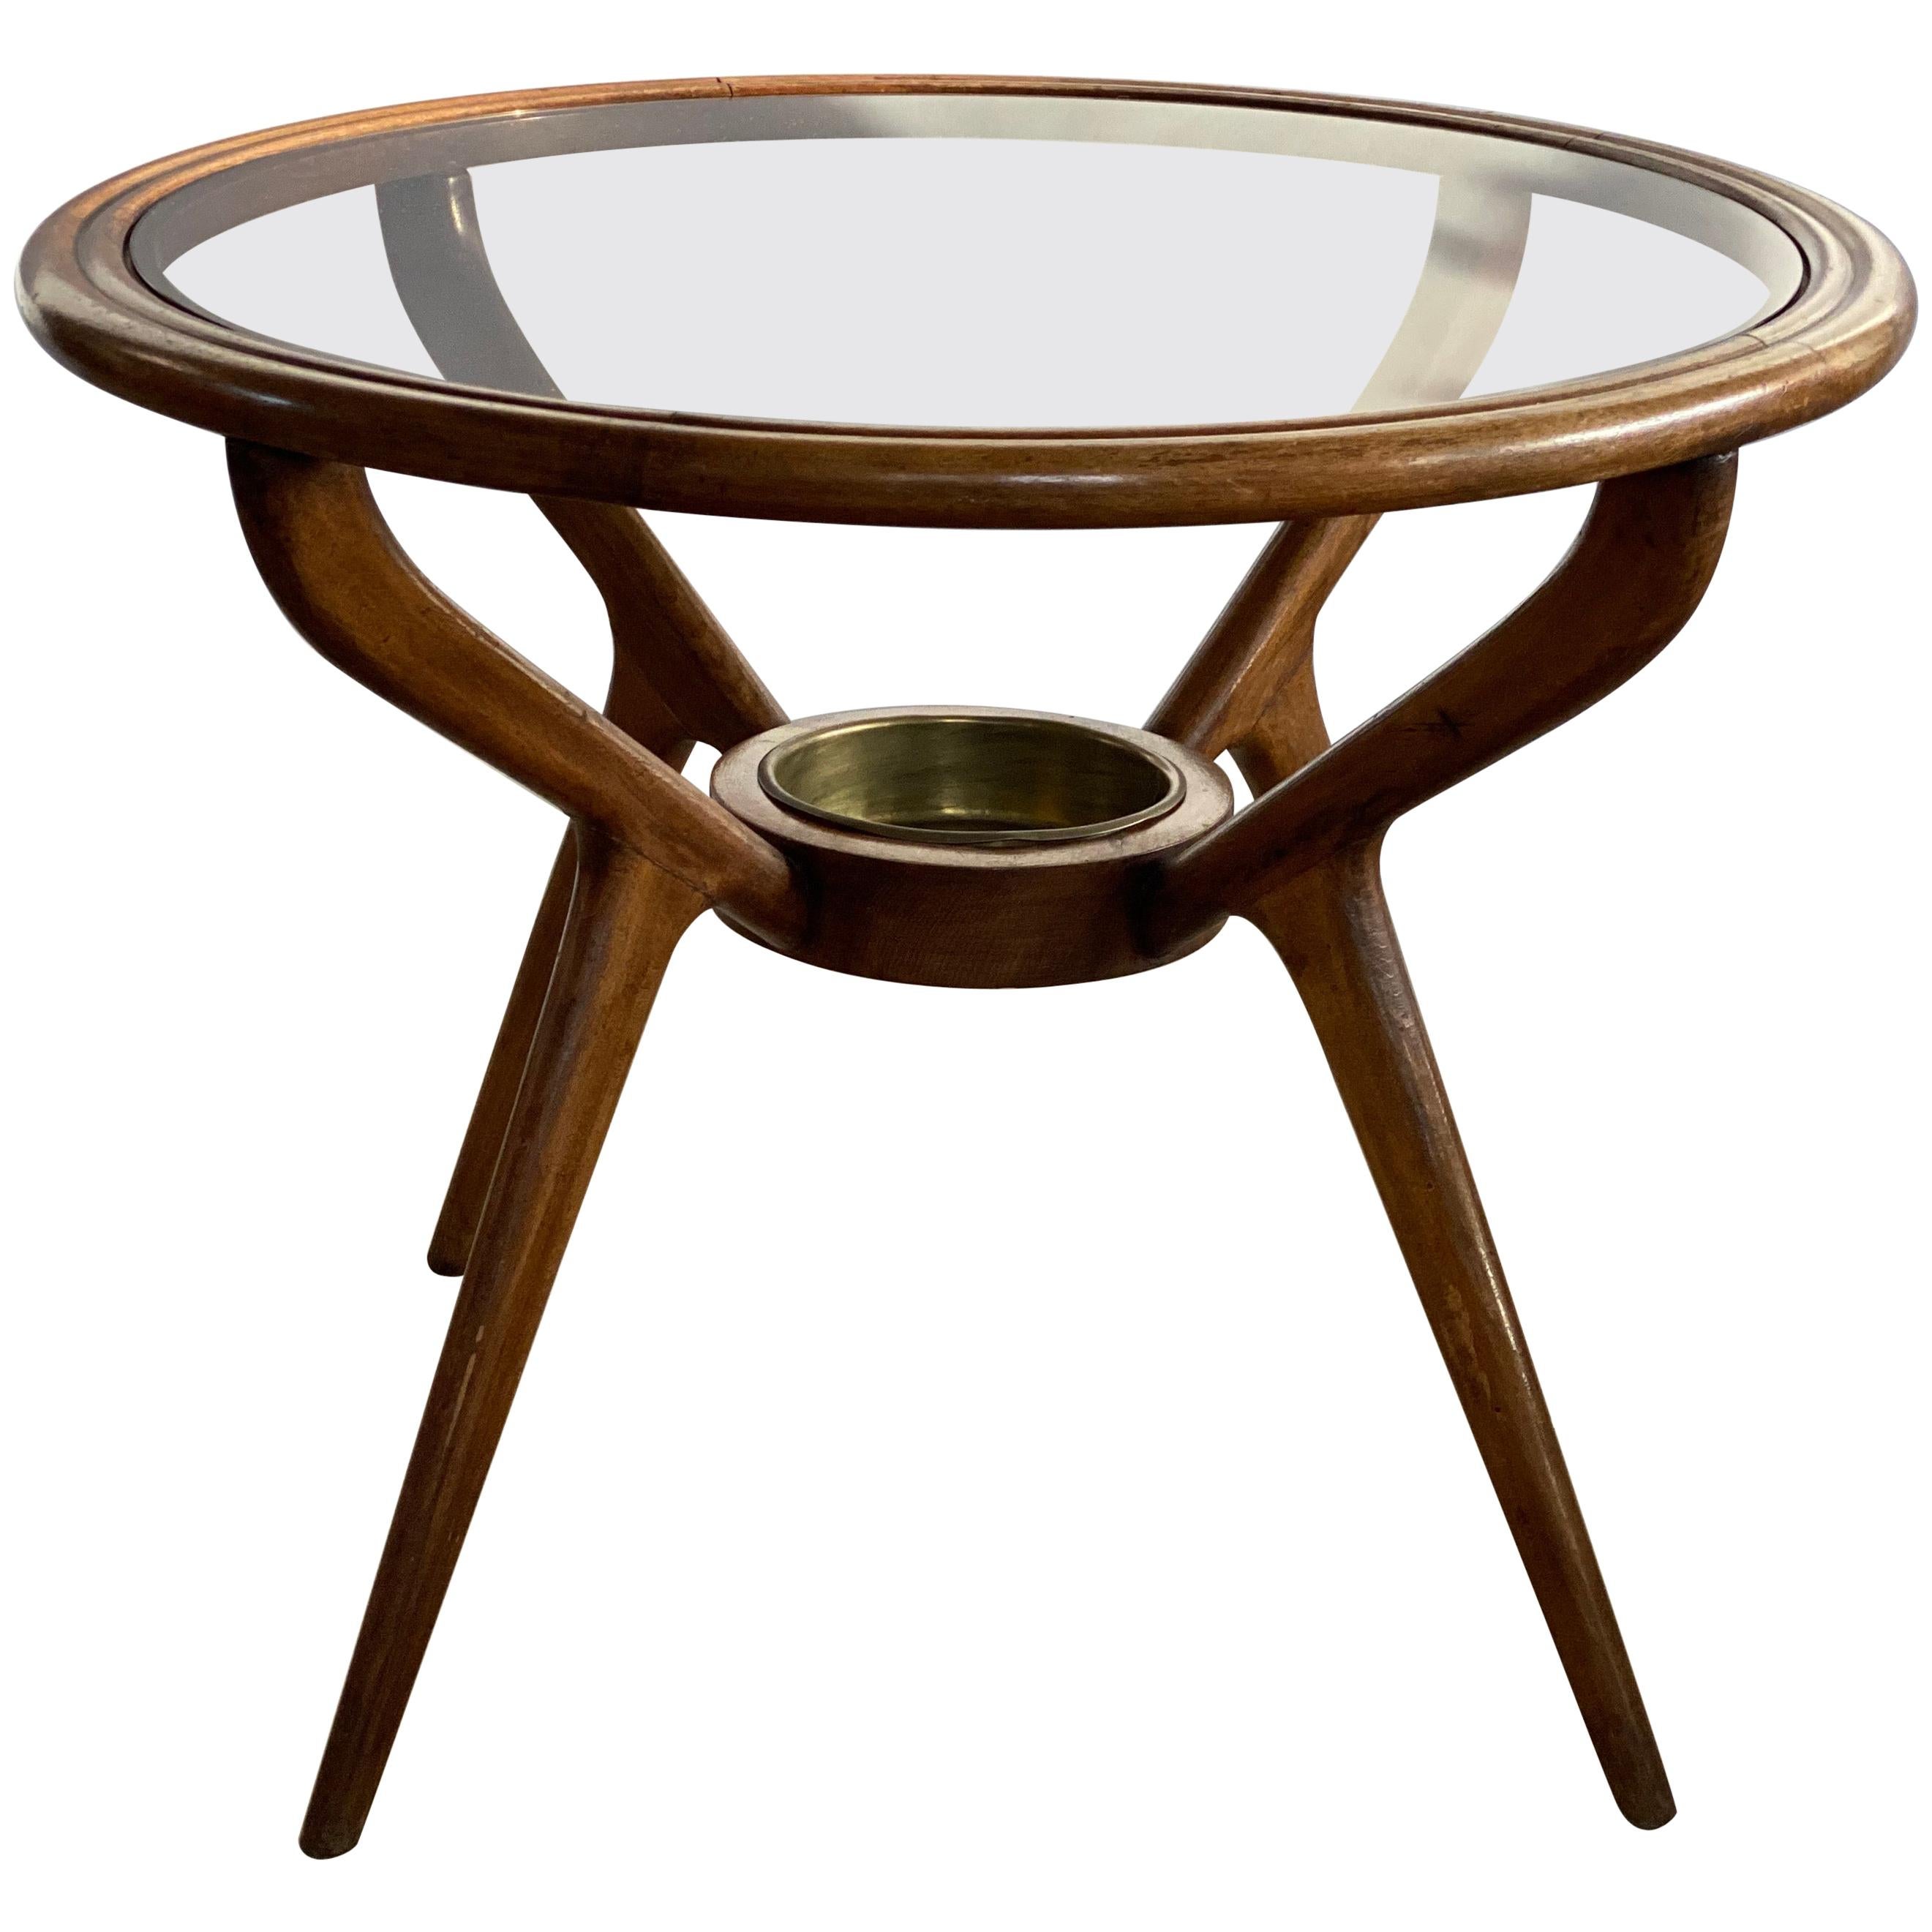 Very Elegant Gio Ponti Style Round Coffee Table